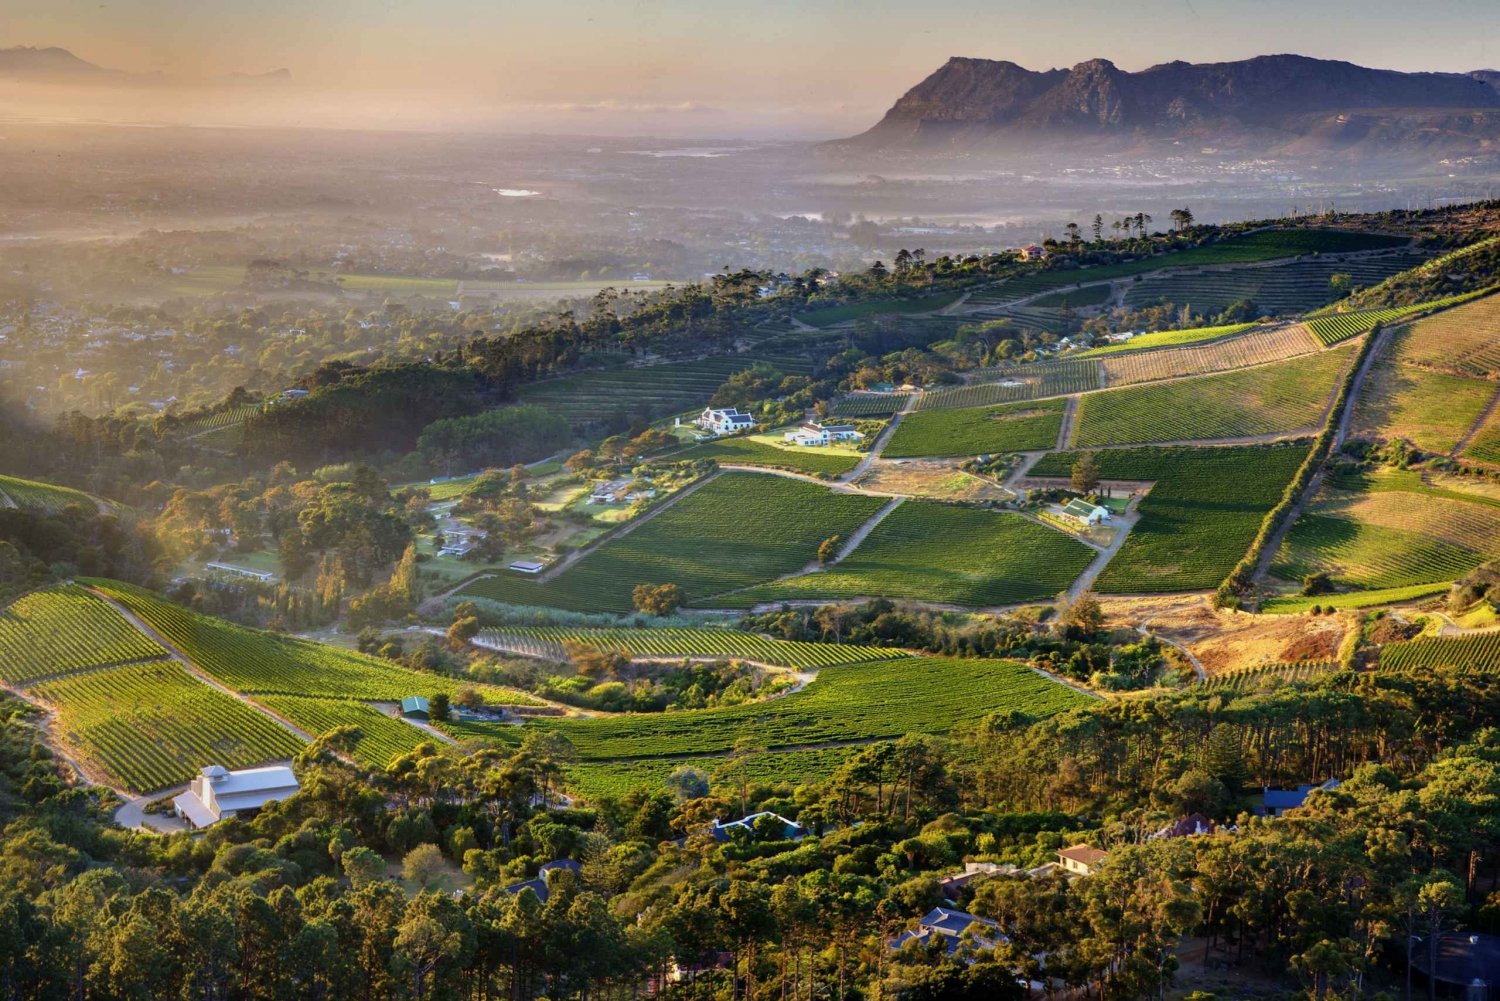 Kapstadt: Halbtägige private Weintour